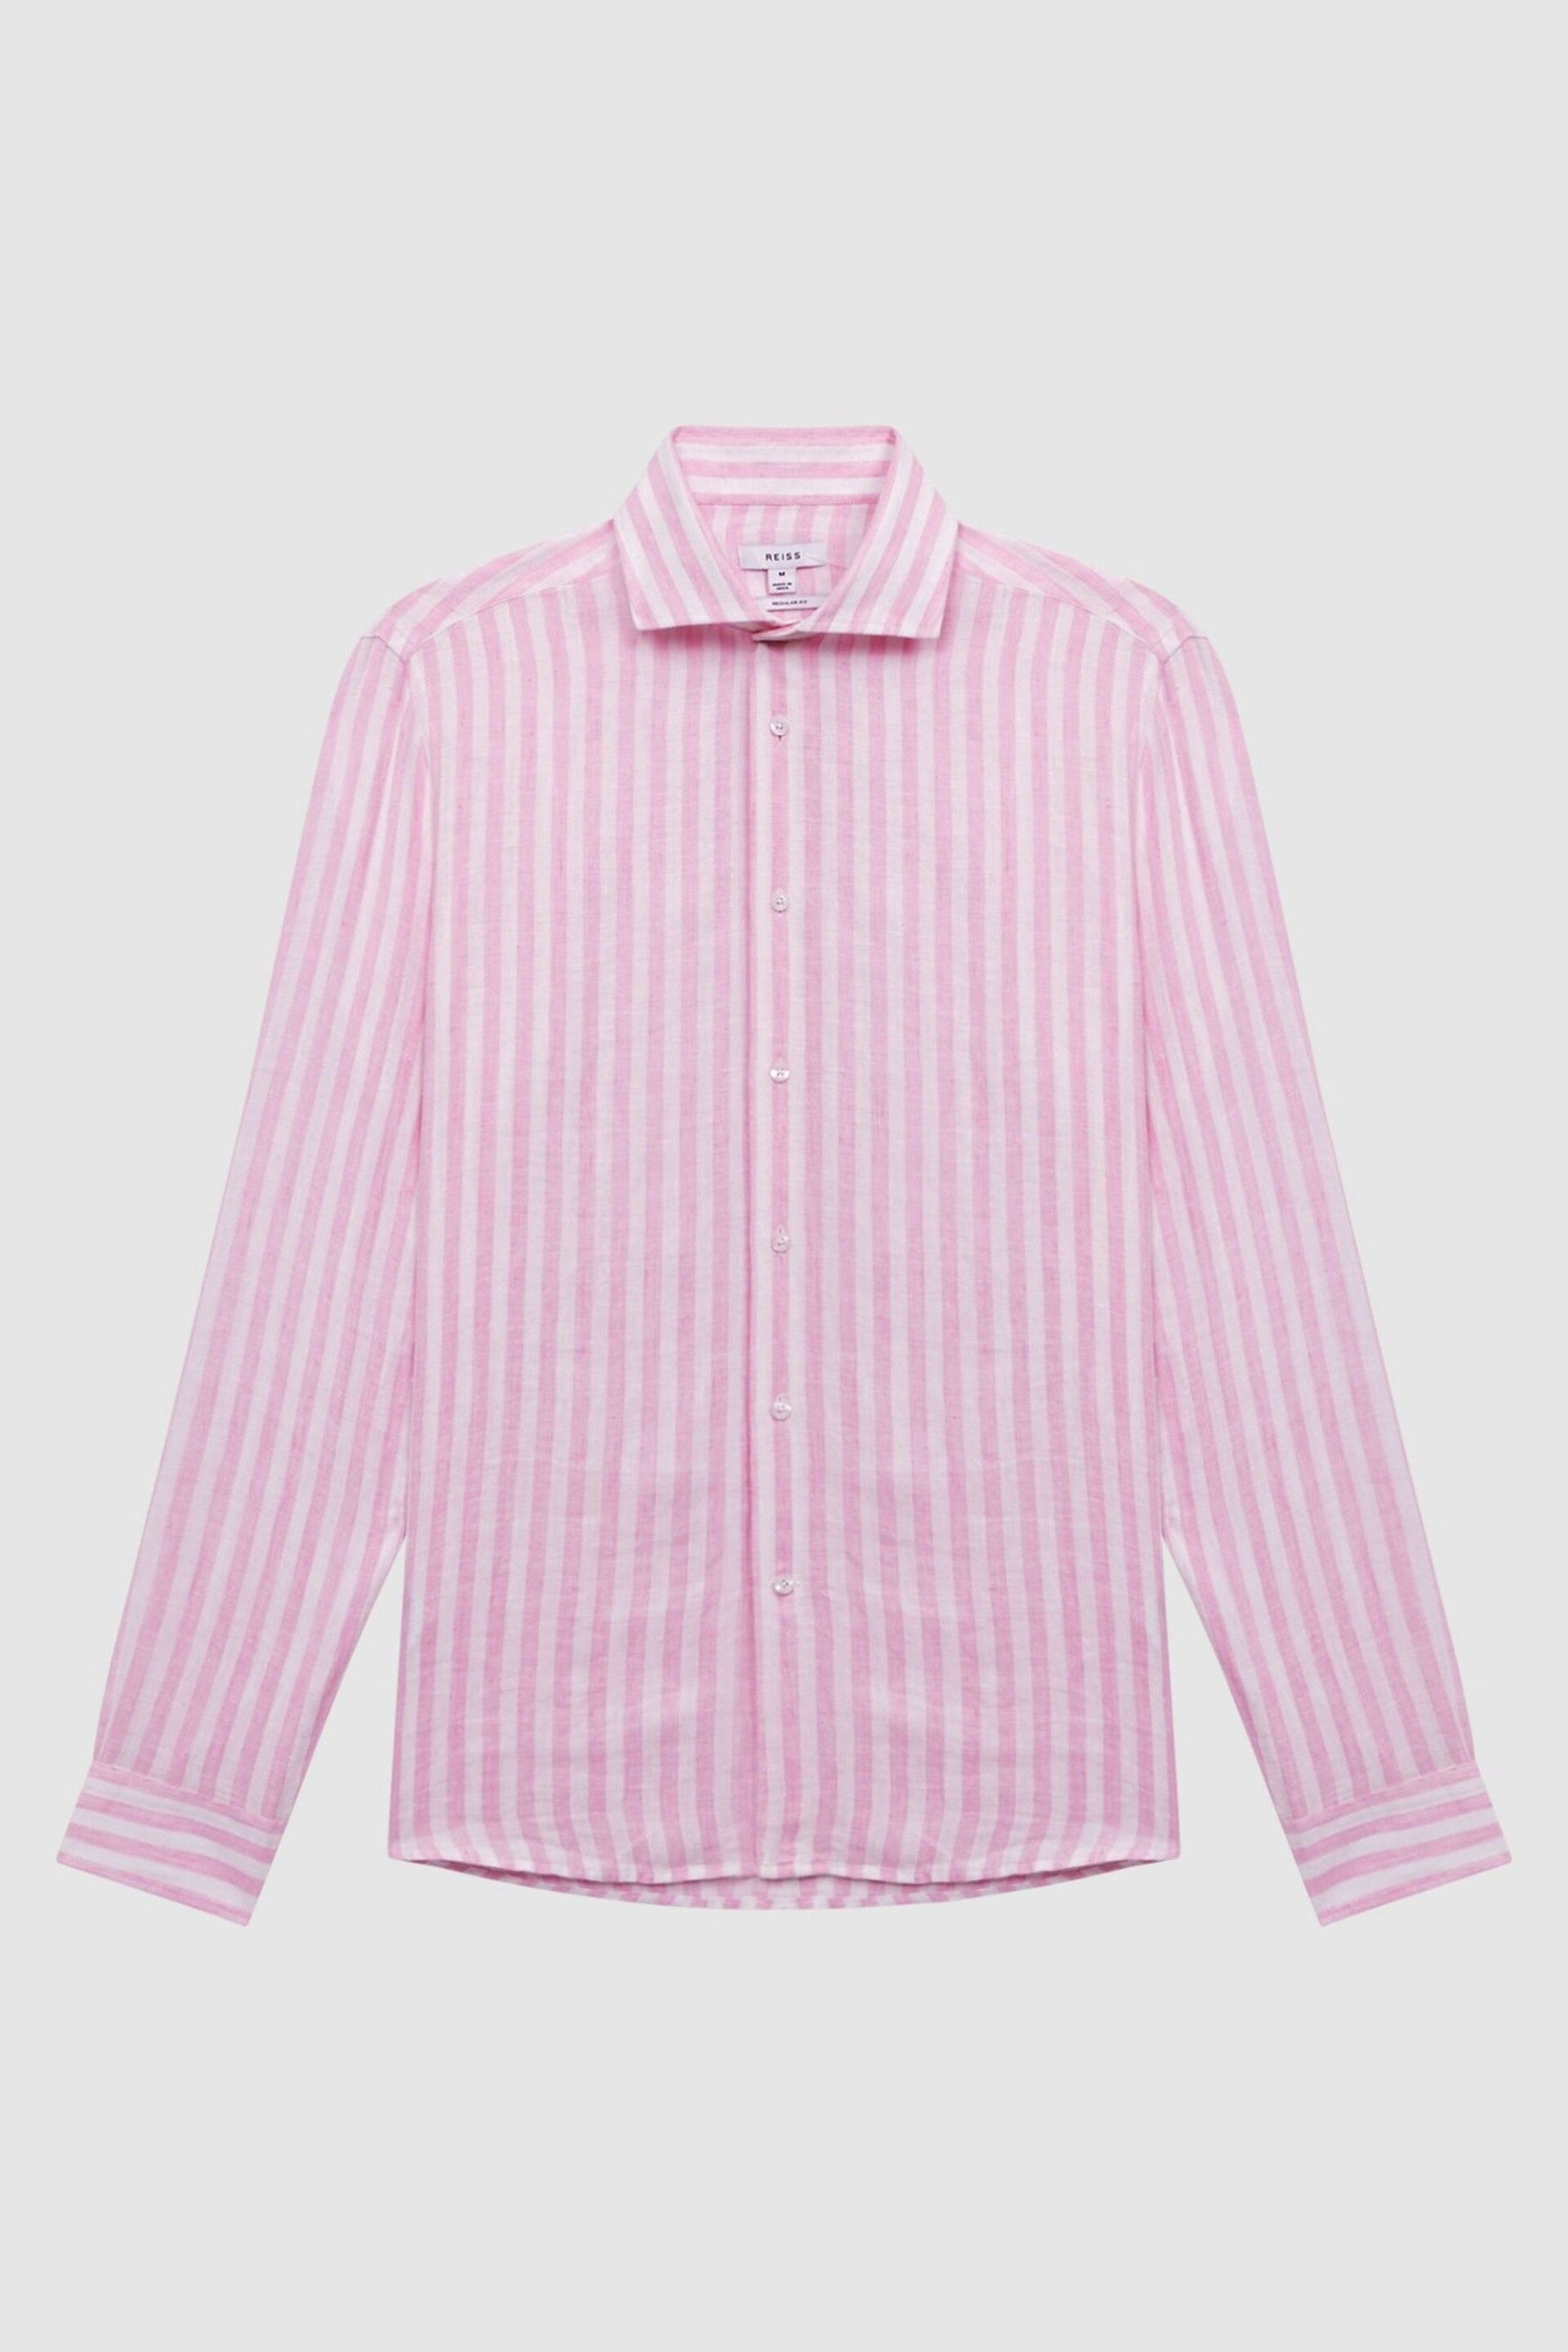 Reiss Soft Pink Herringbone Stripe Ruban Linen Long Sleeve Shirt - Image 2 of 5